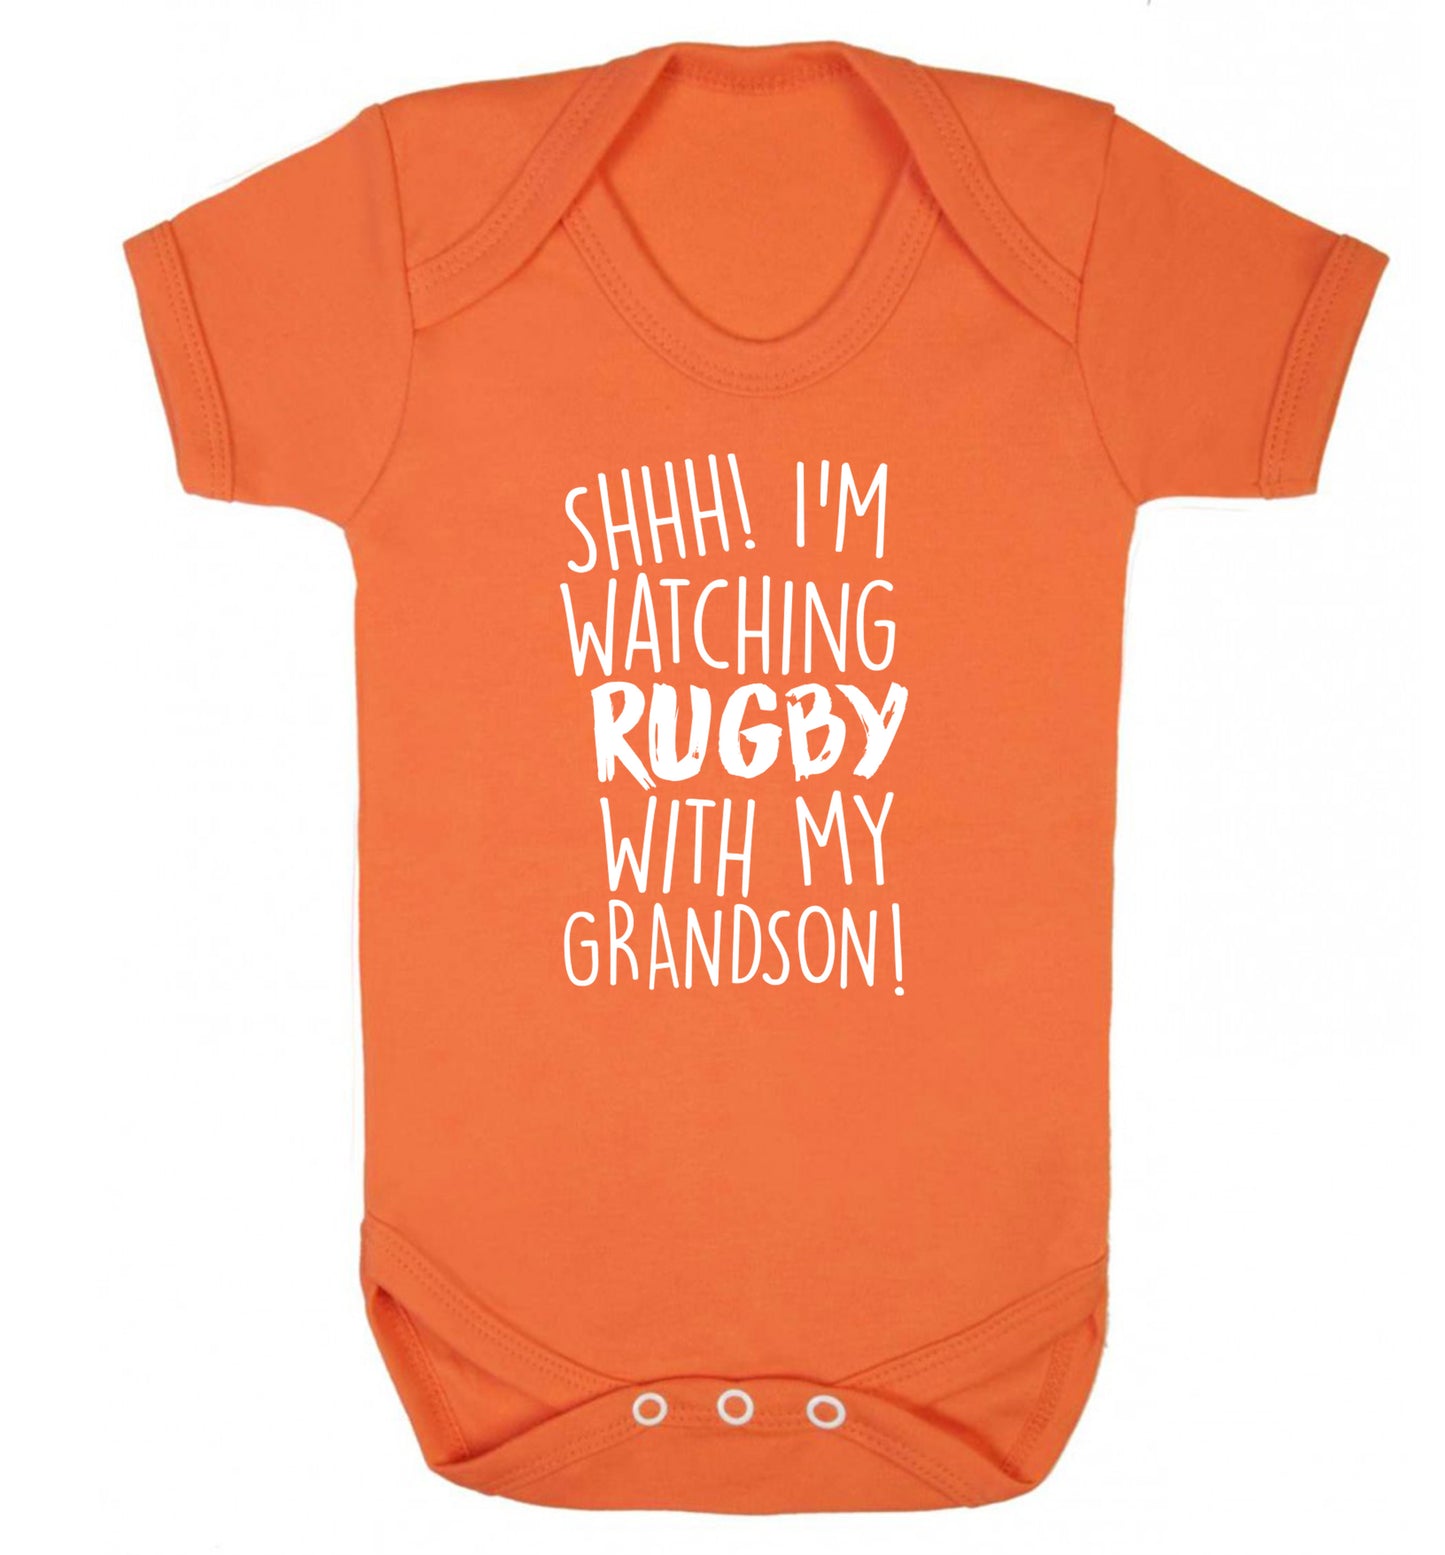 Shh I'm watching rugby with my grandson Baby Vest orange 18-24 months